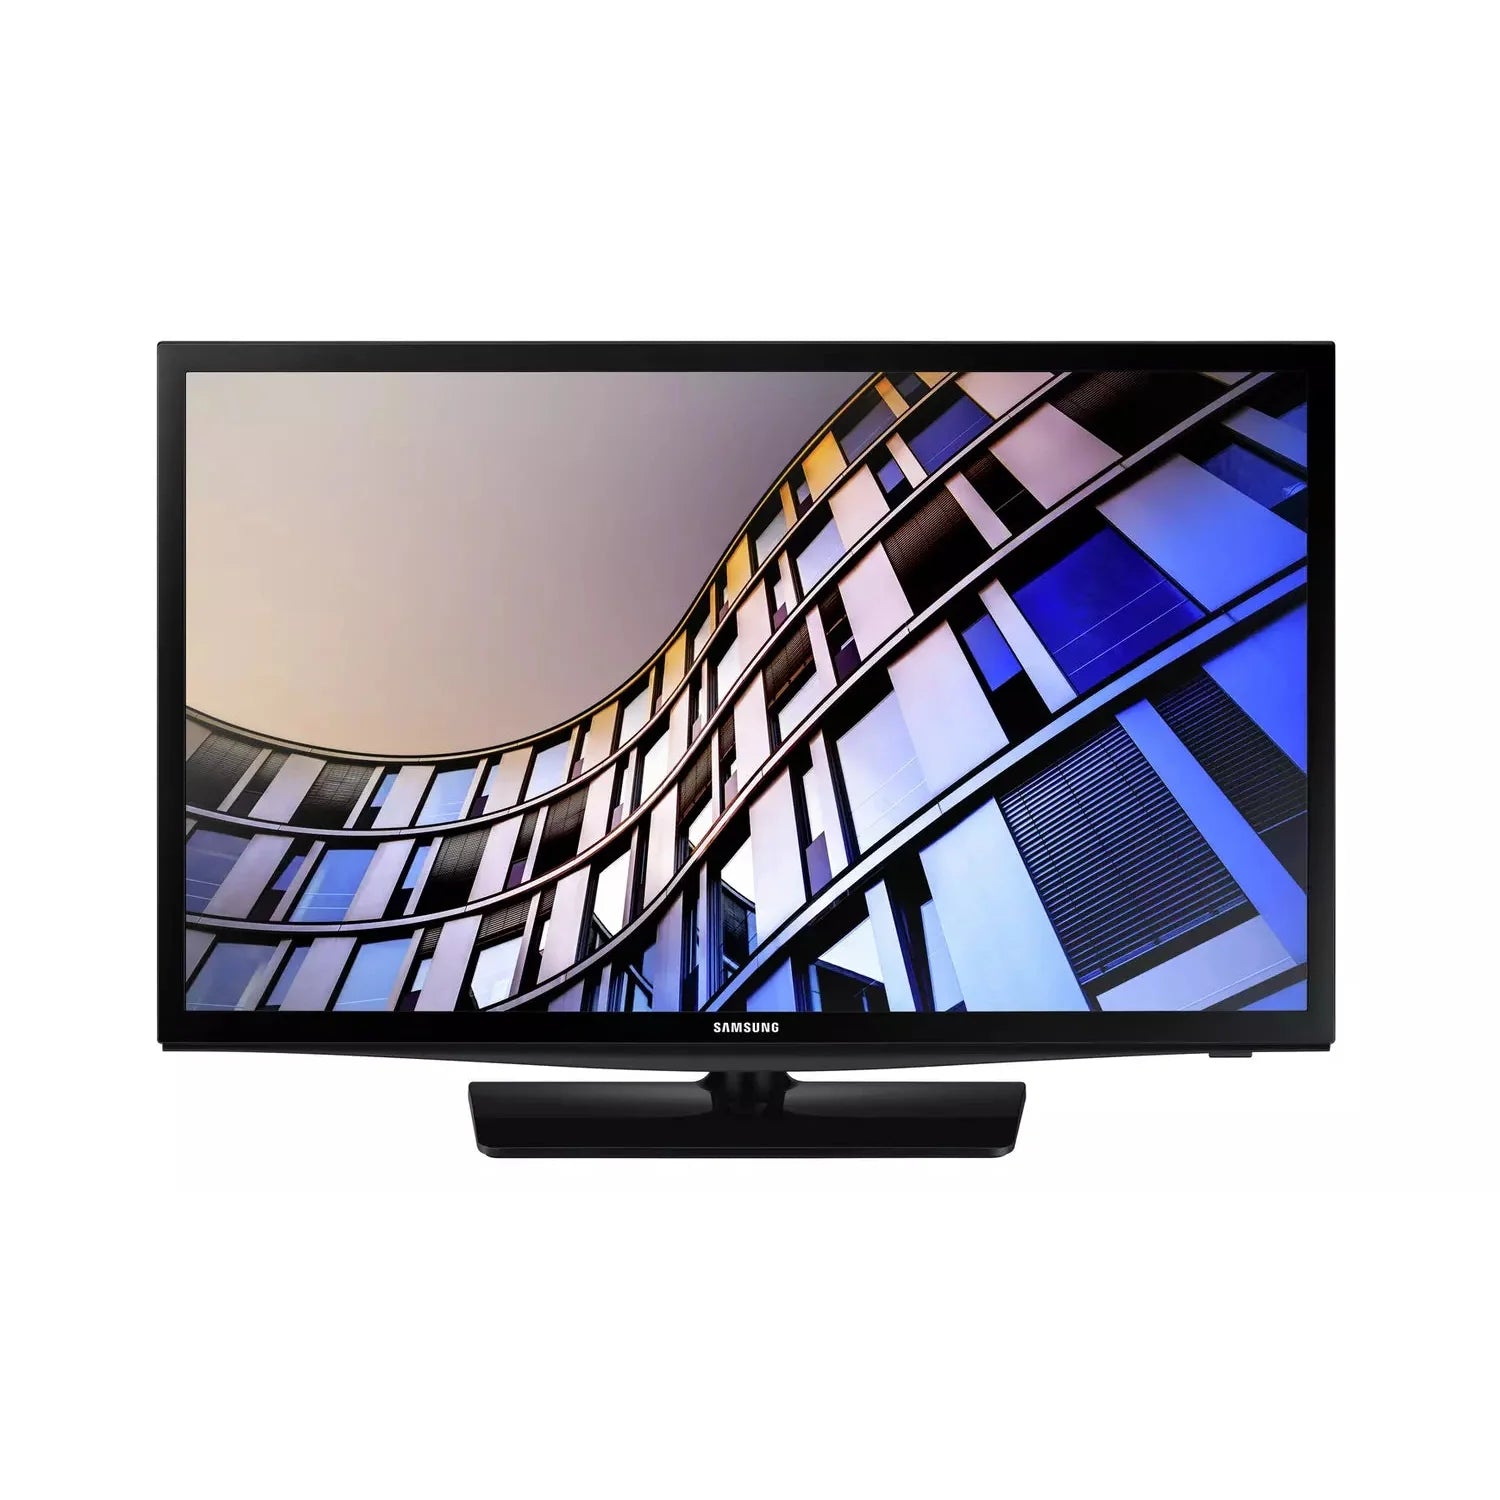 Samsung UE24N4300 24" Smart HD Ready TV - Refurbished Good